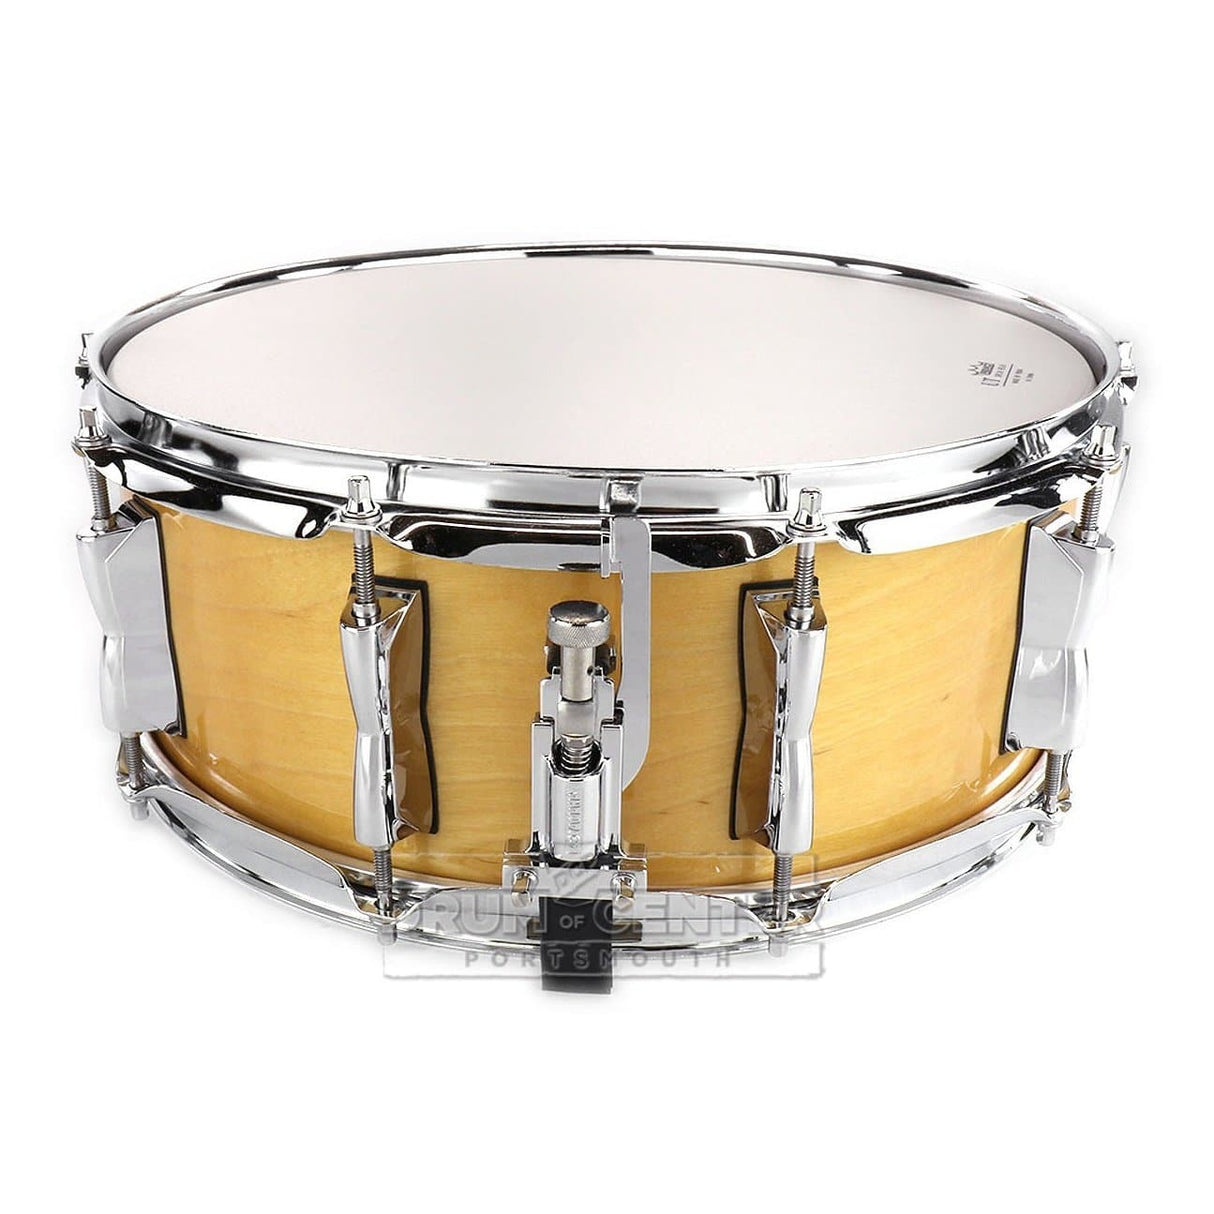 Yamaha Stage Custom Birch Snare Drum 14x5.5 Natural Wood